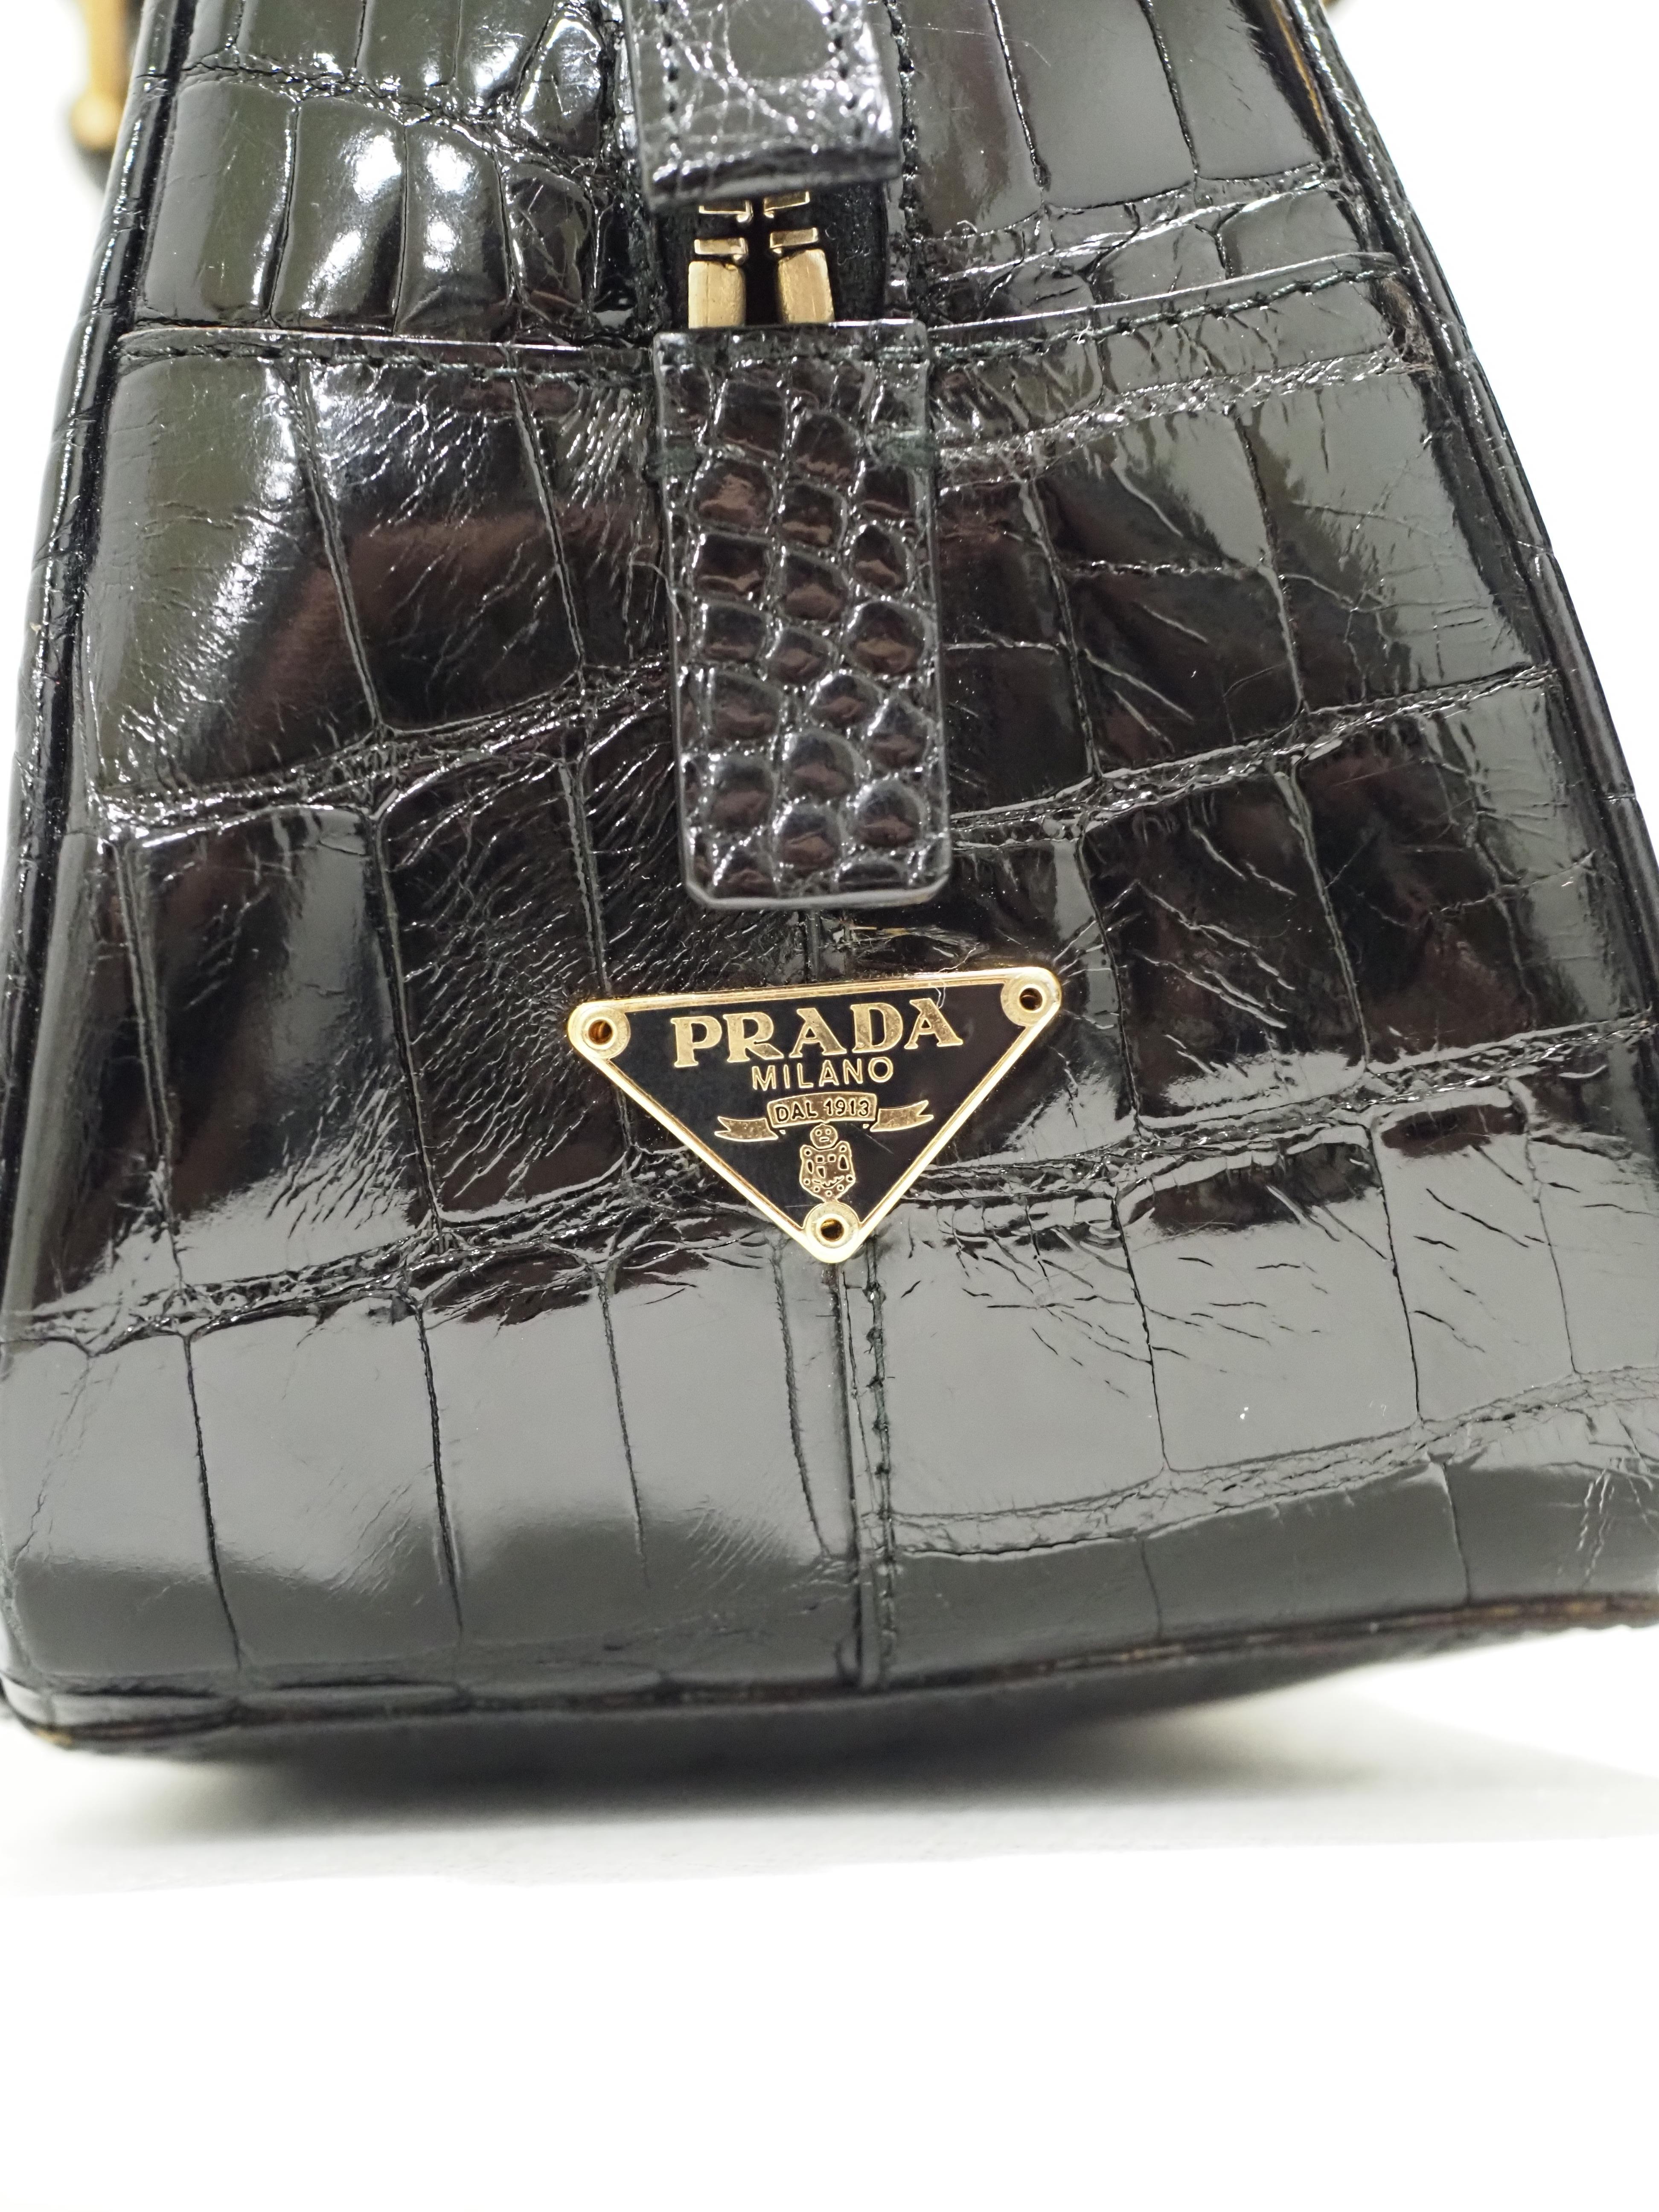 Prada black croco leather handbag
totally made in italy
measurements: 23*13 cm, 9 cm depth